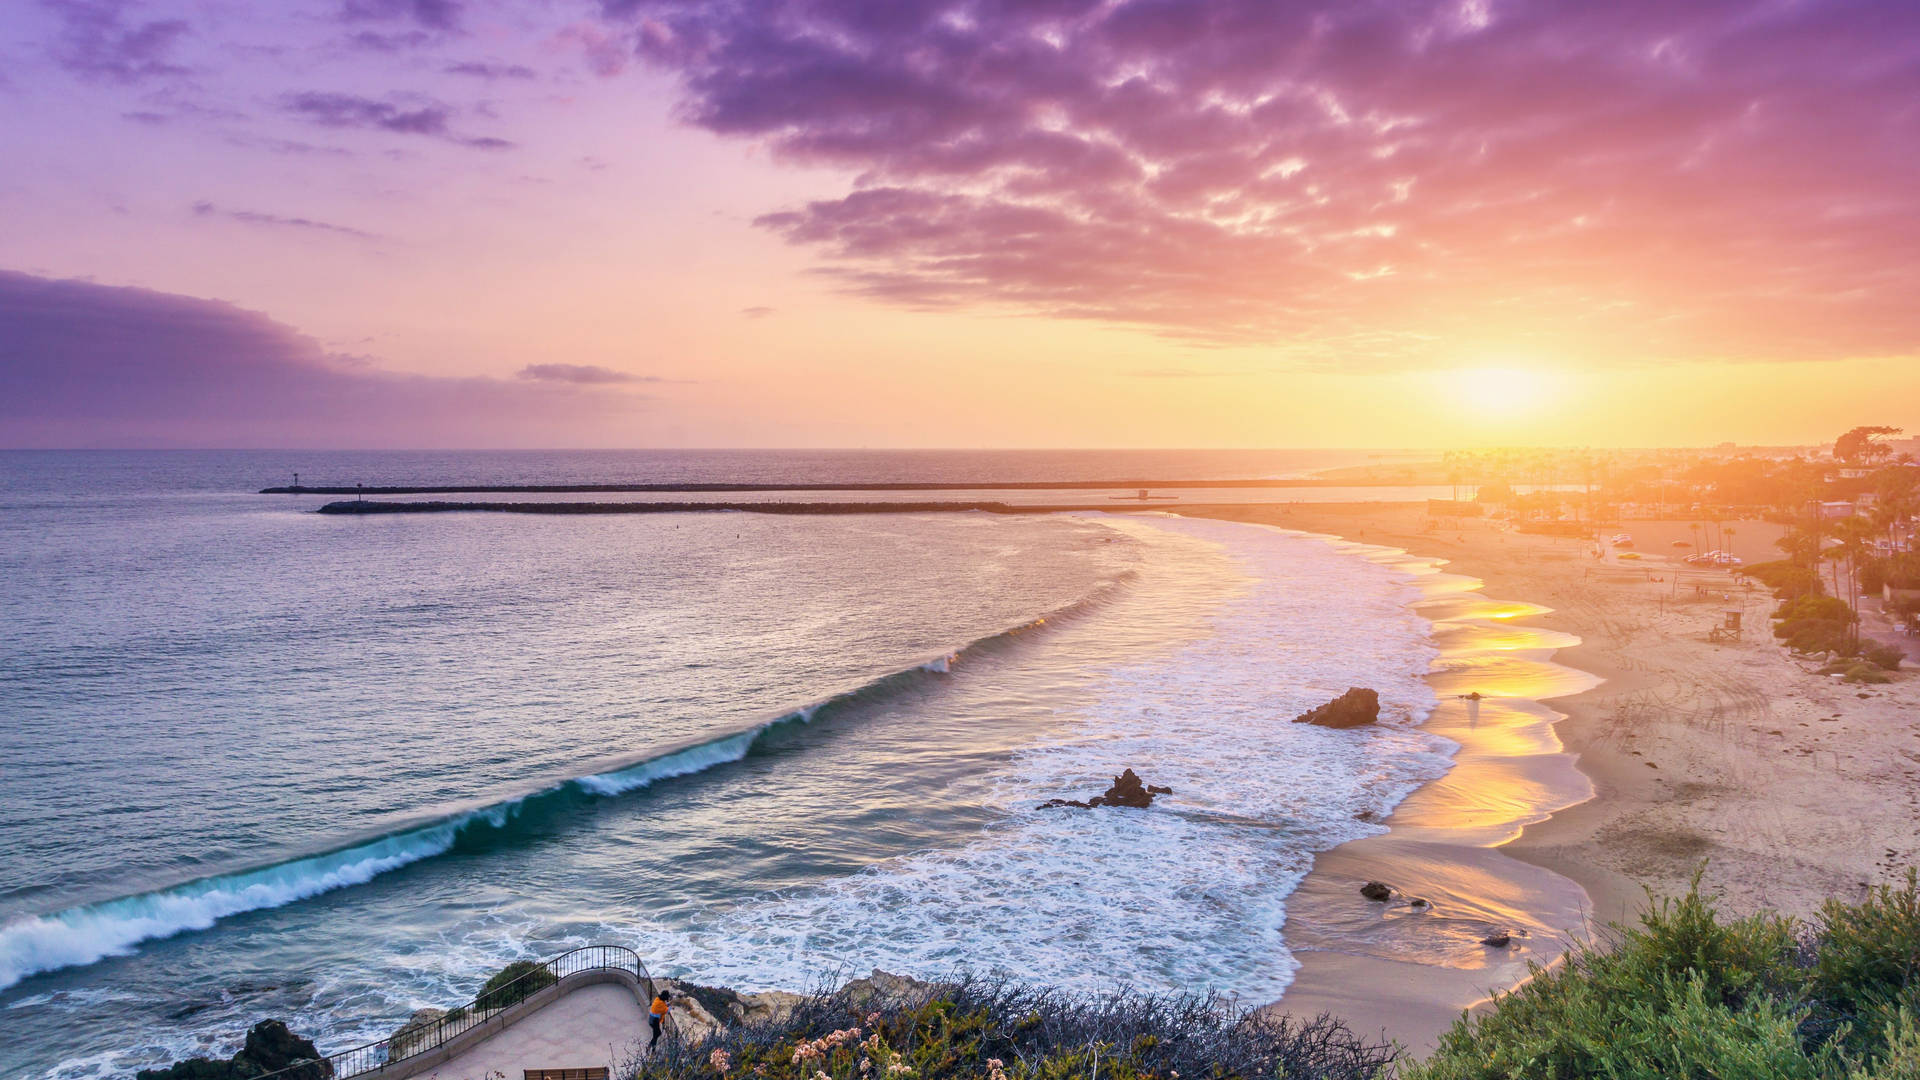 A Sunset Over The Ocean At A Beach Wallpaper